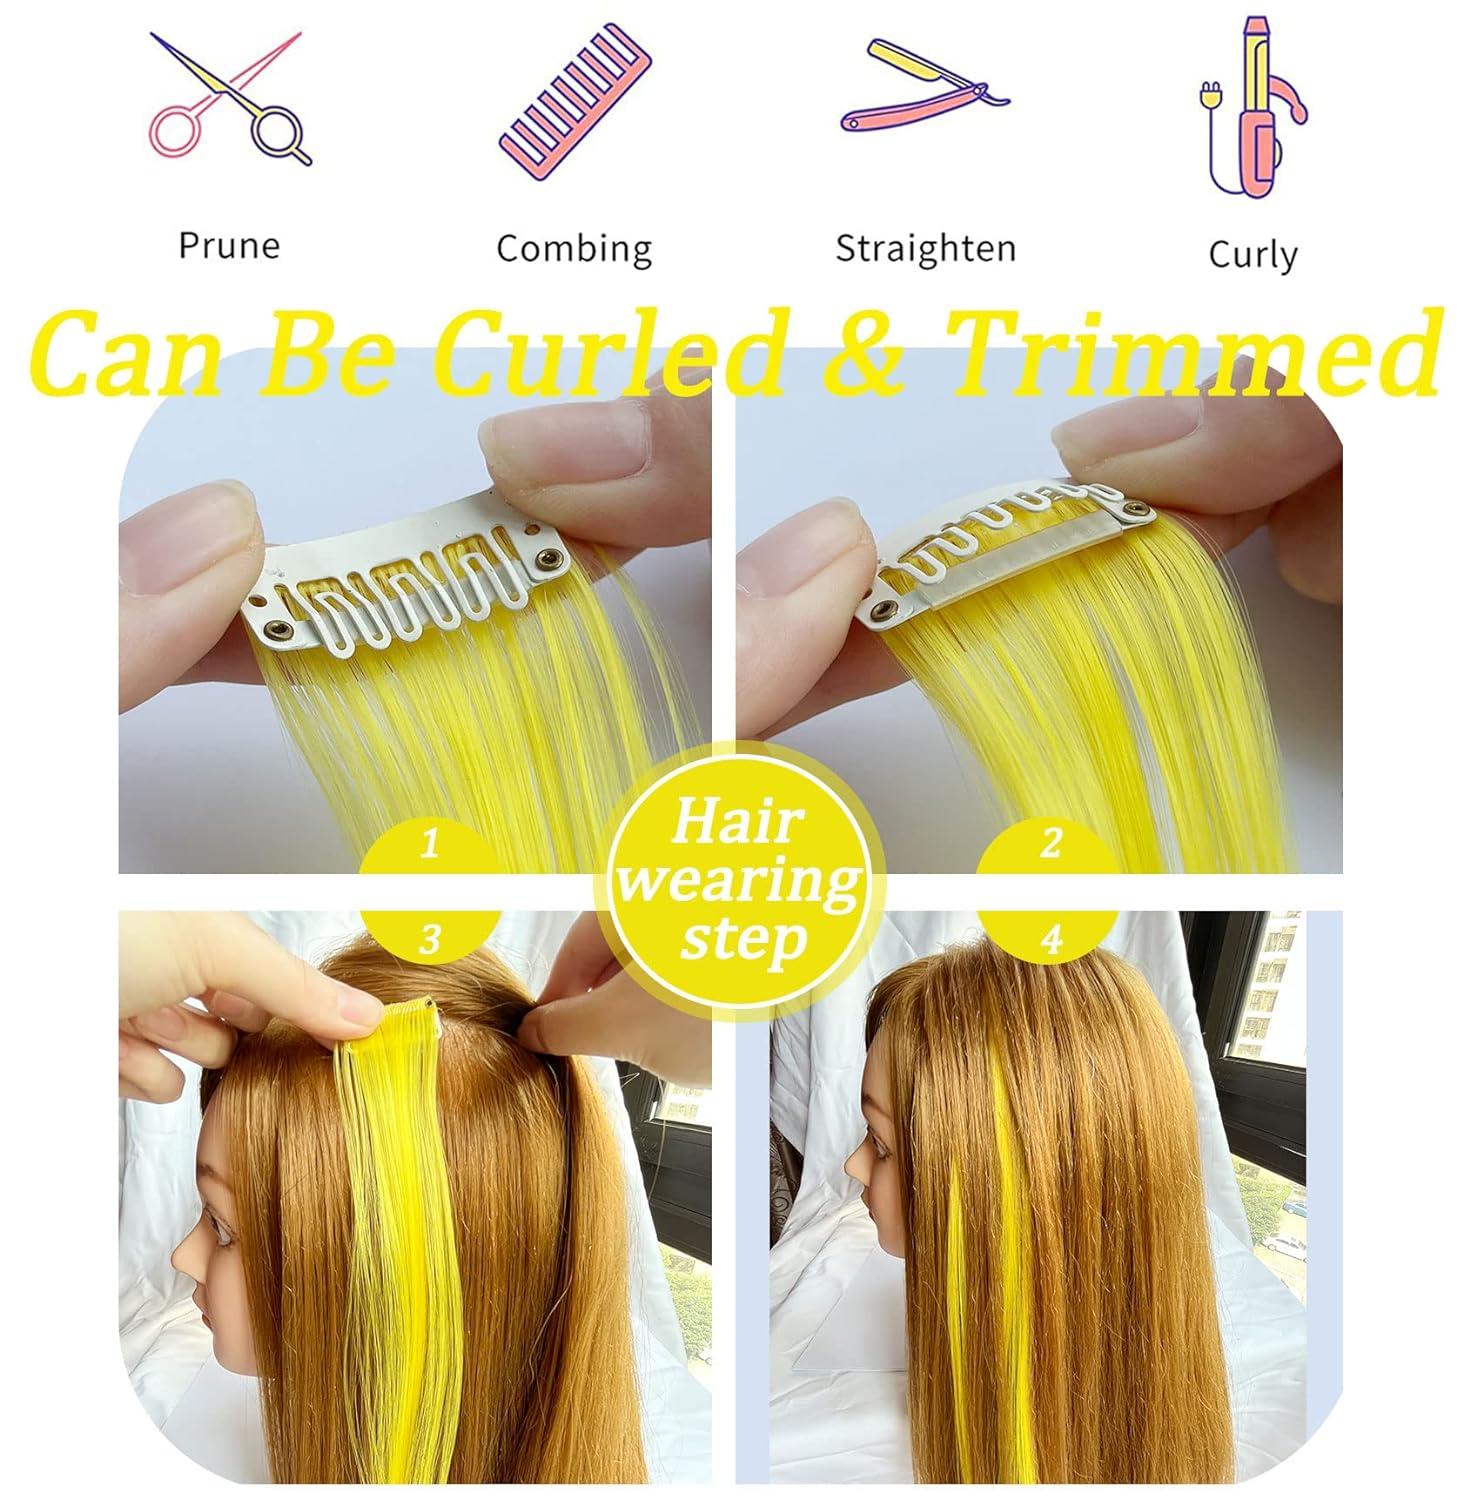 Hair Extensions, Hair Extension Clip Ins, Mermaid Hair, Unicorn Hair, Clip  in Hair Extension, Gift for Girls 